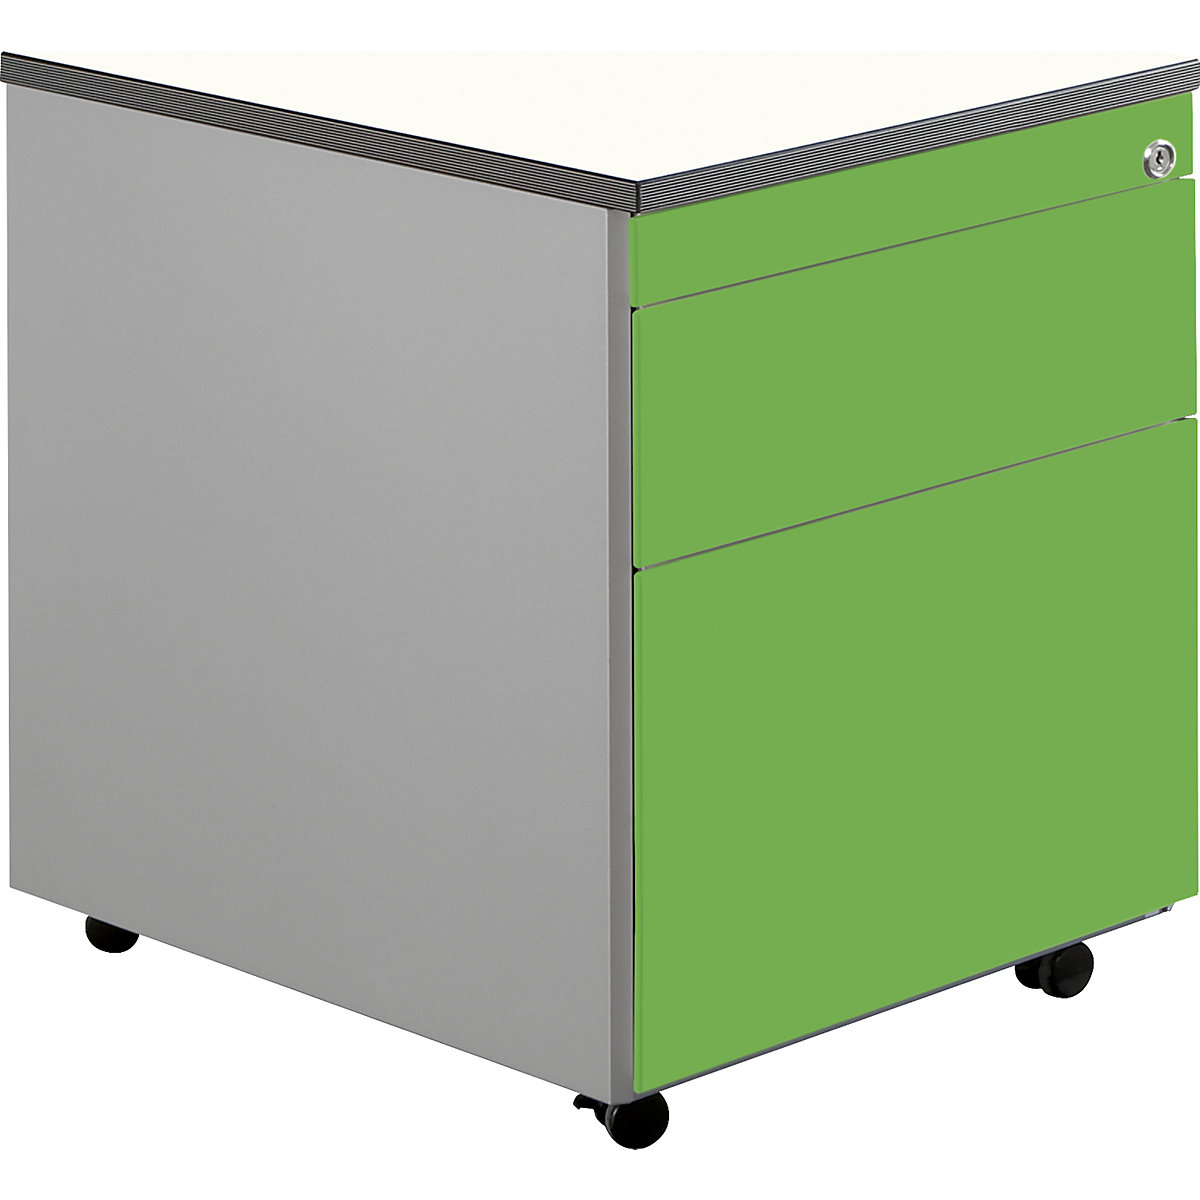 Zásuvkový kontejner s koly – mauser, v x h 579 x 600 mm, 1 zásuvka na materiál, 1 kartotéka pro závěsné složky, bílý hliník / zelenožlutá / bílá-6